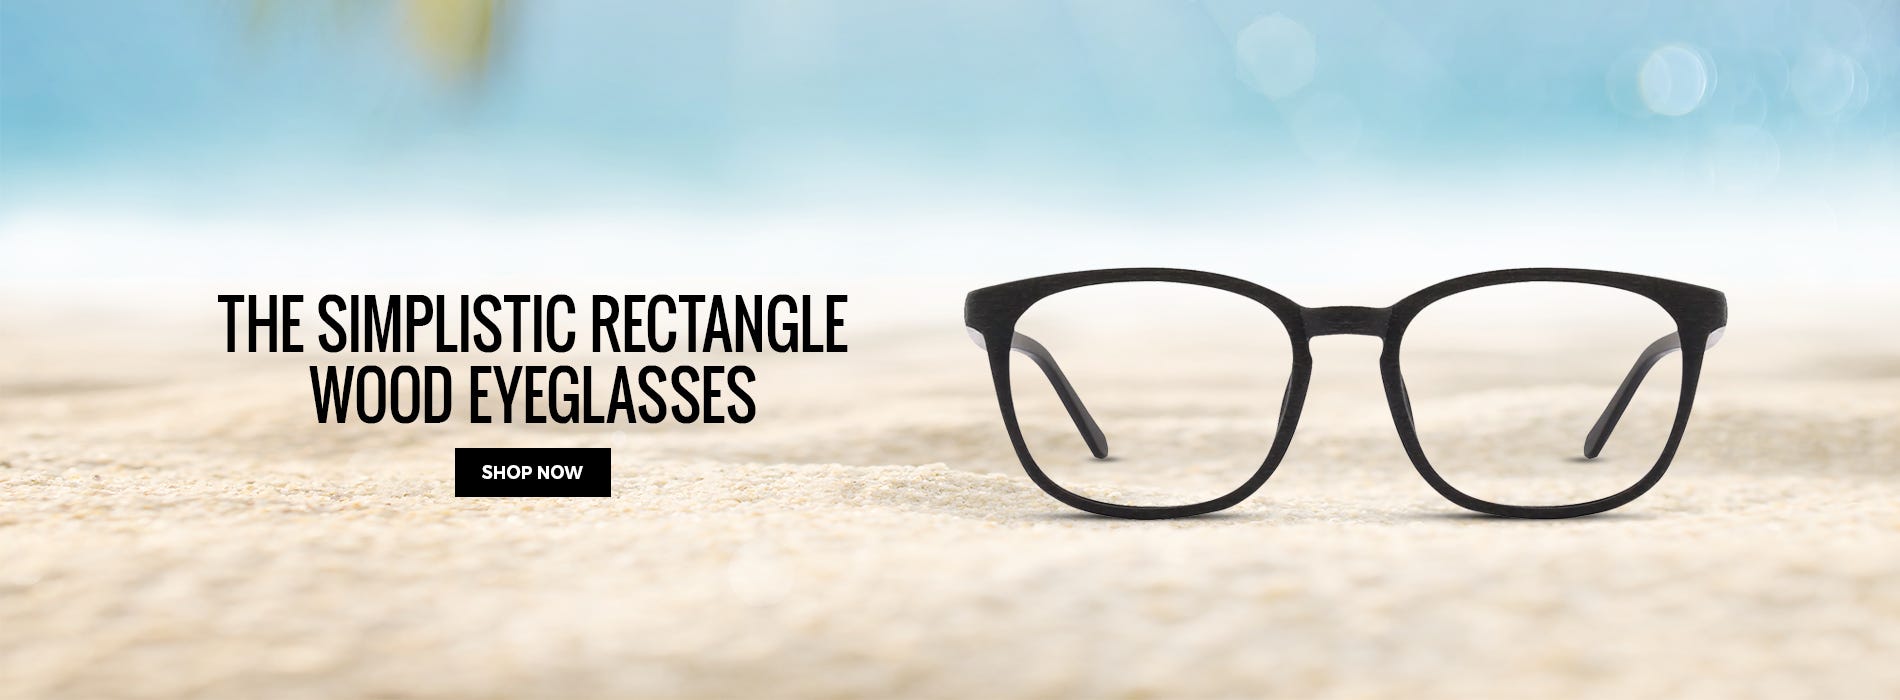 The Simplistic Rectangle Eyeglasses